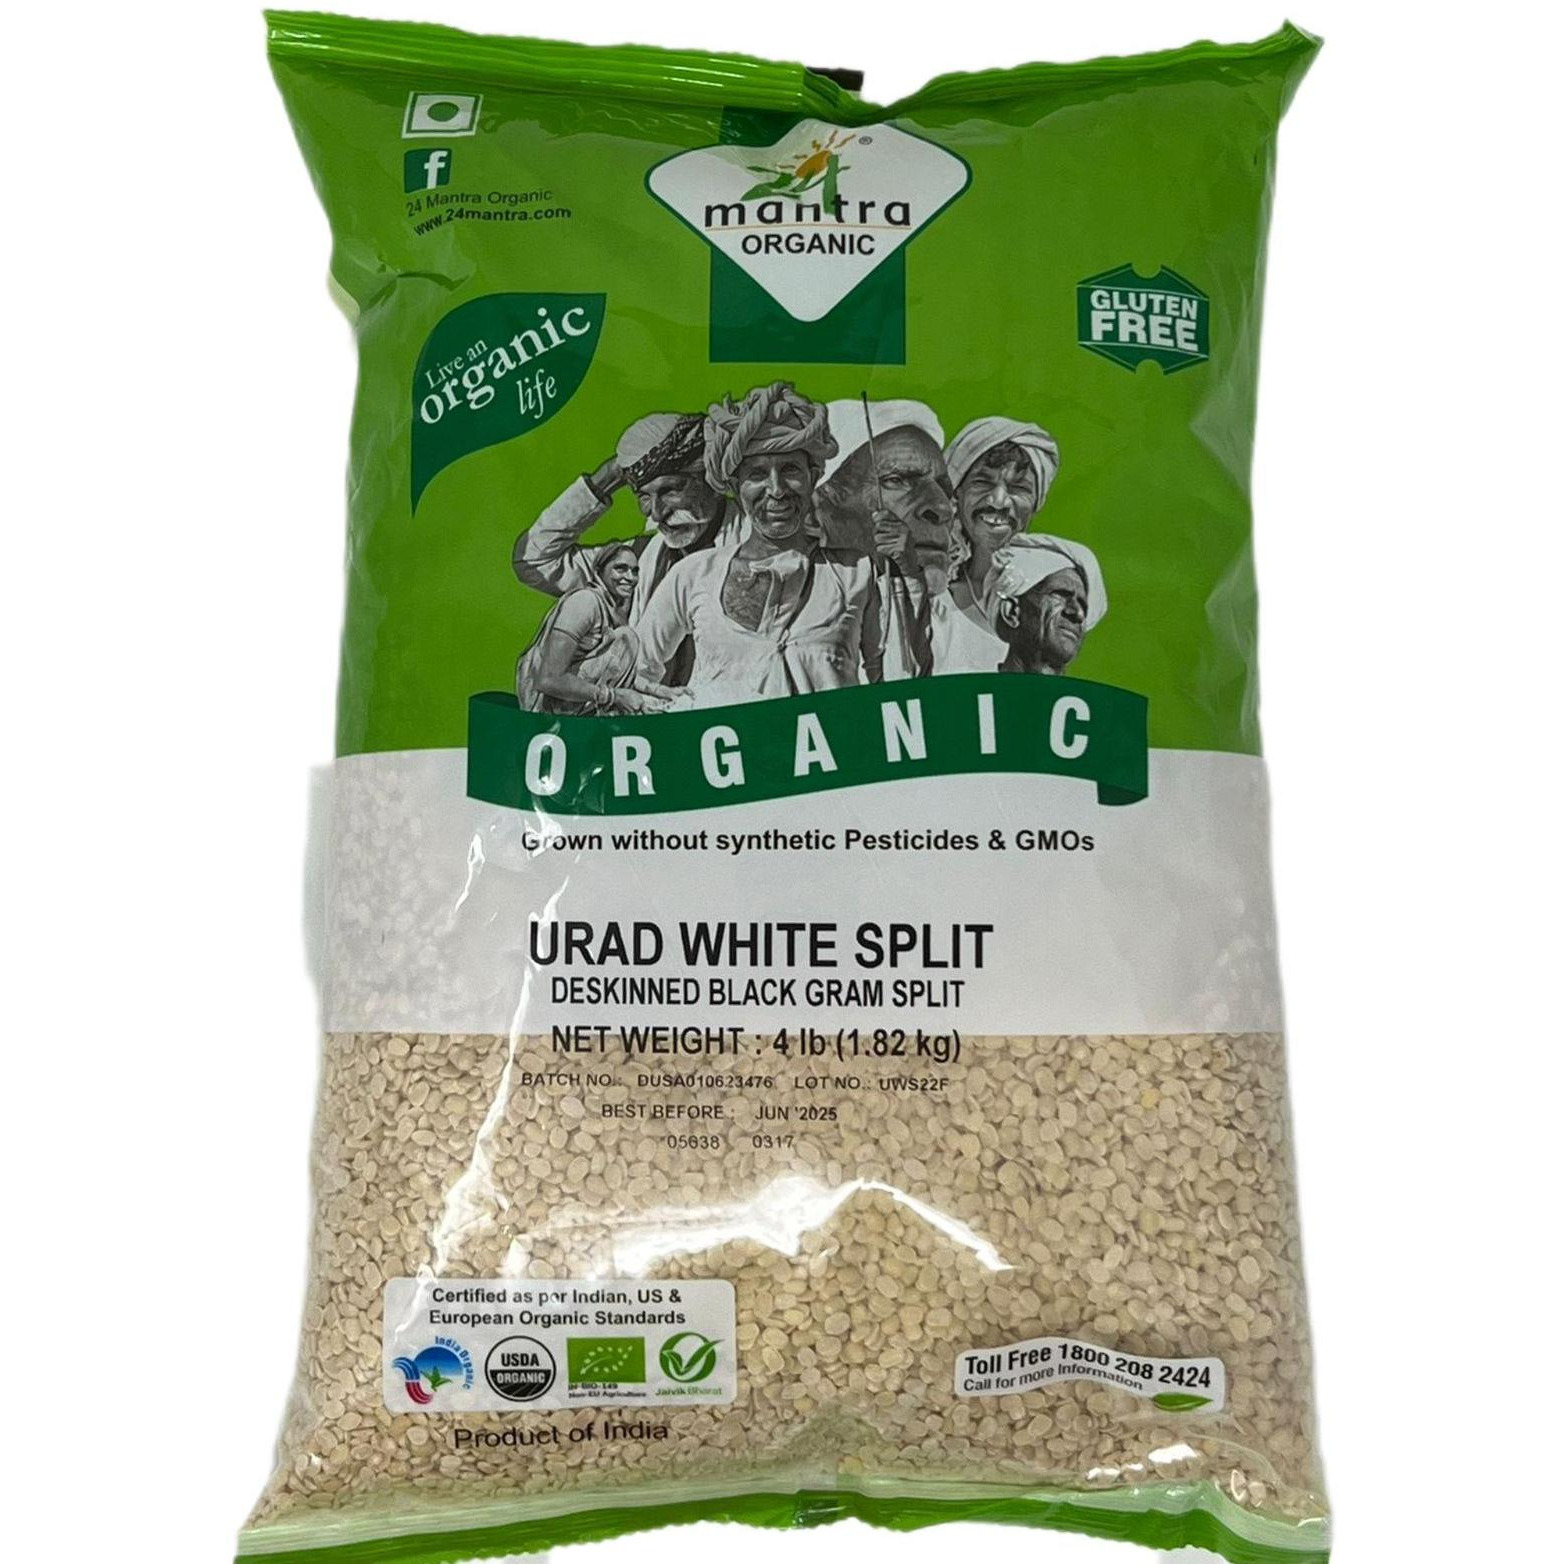 Case of 10 - 24 Mantra Organic Urad White Split - 4 Lb